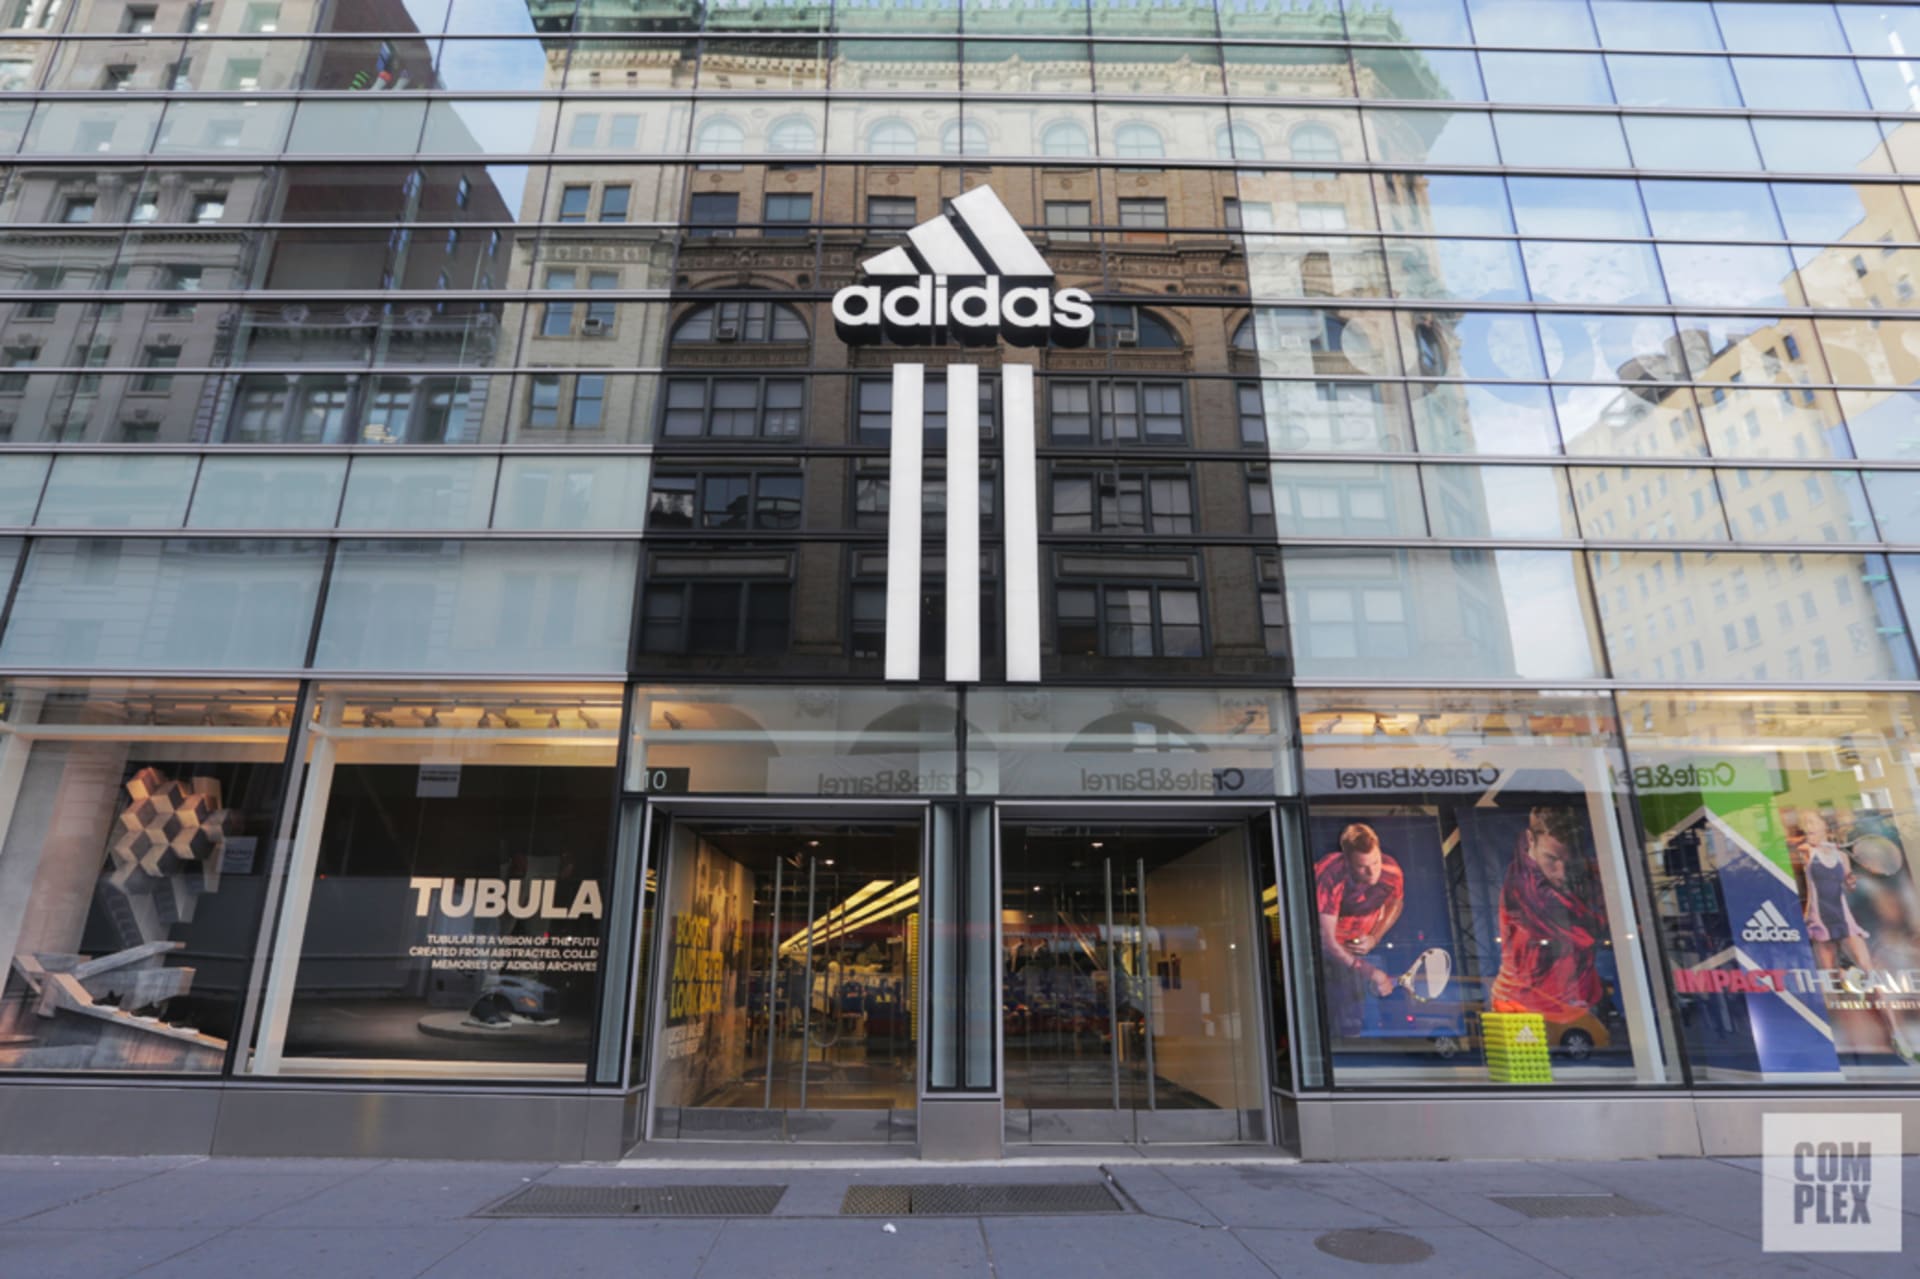 kontrast destillation pause The 10 Best Sneaker Stores in NYC | Complex